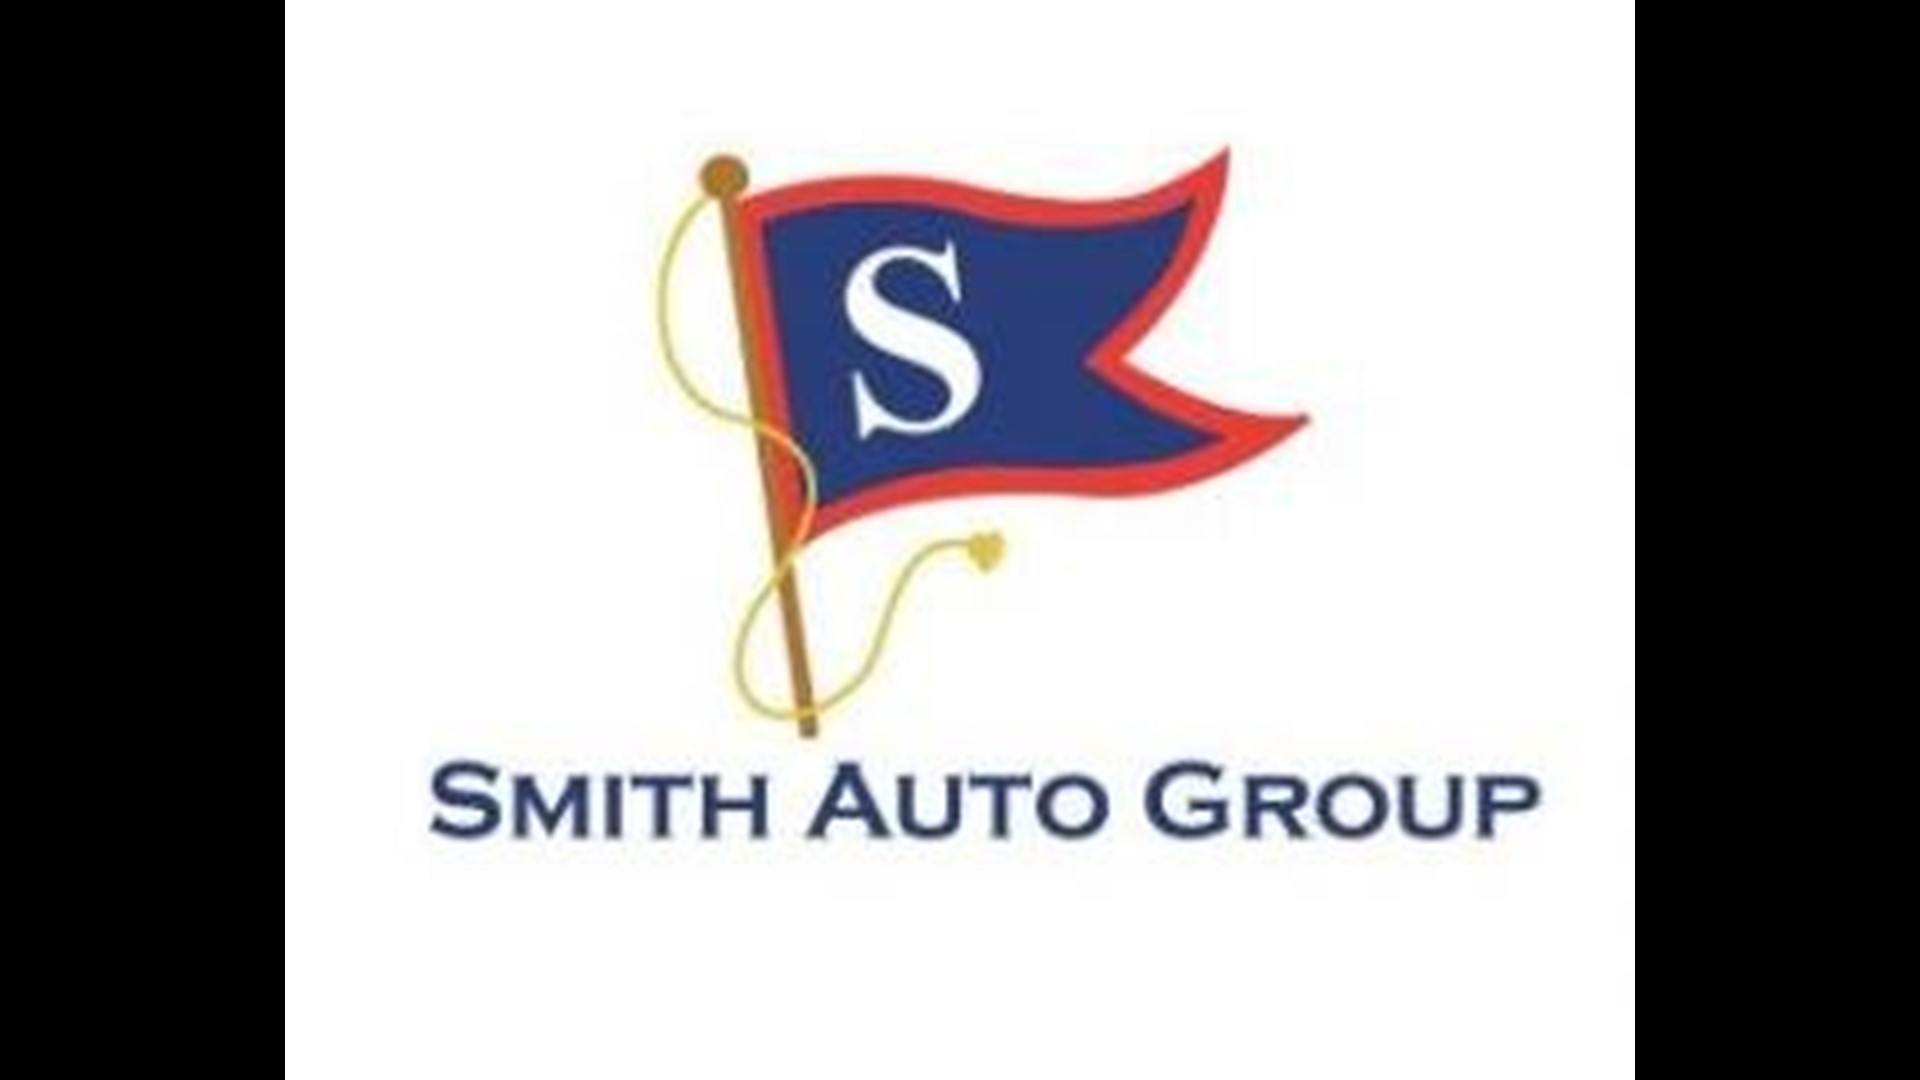 Smith Auto Group Expands into Northwest Arkansas